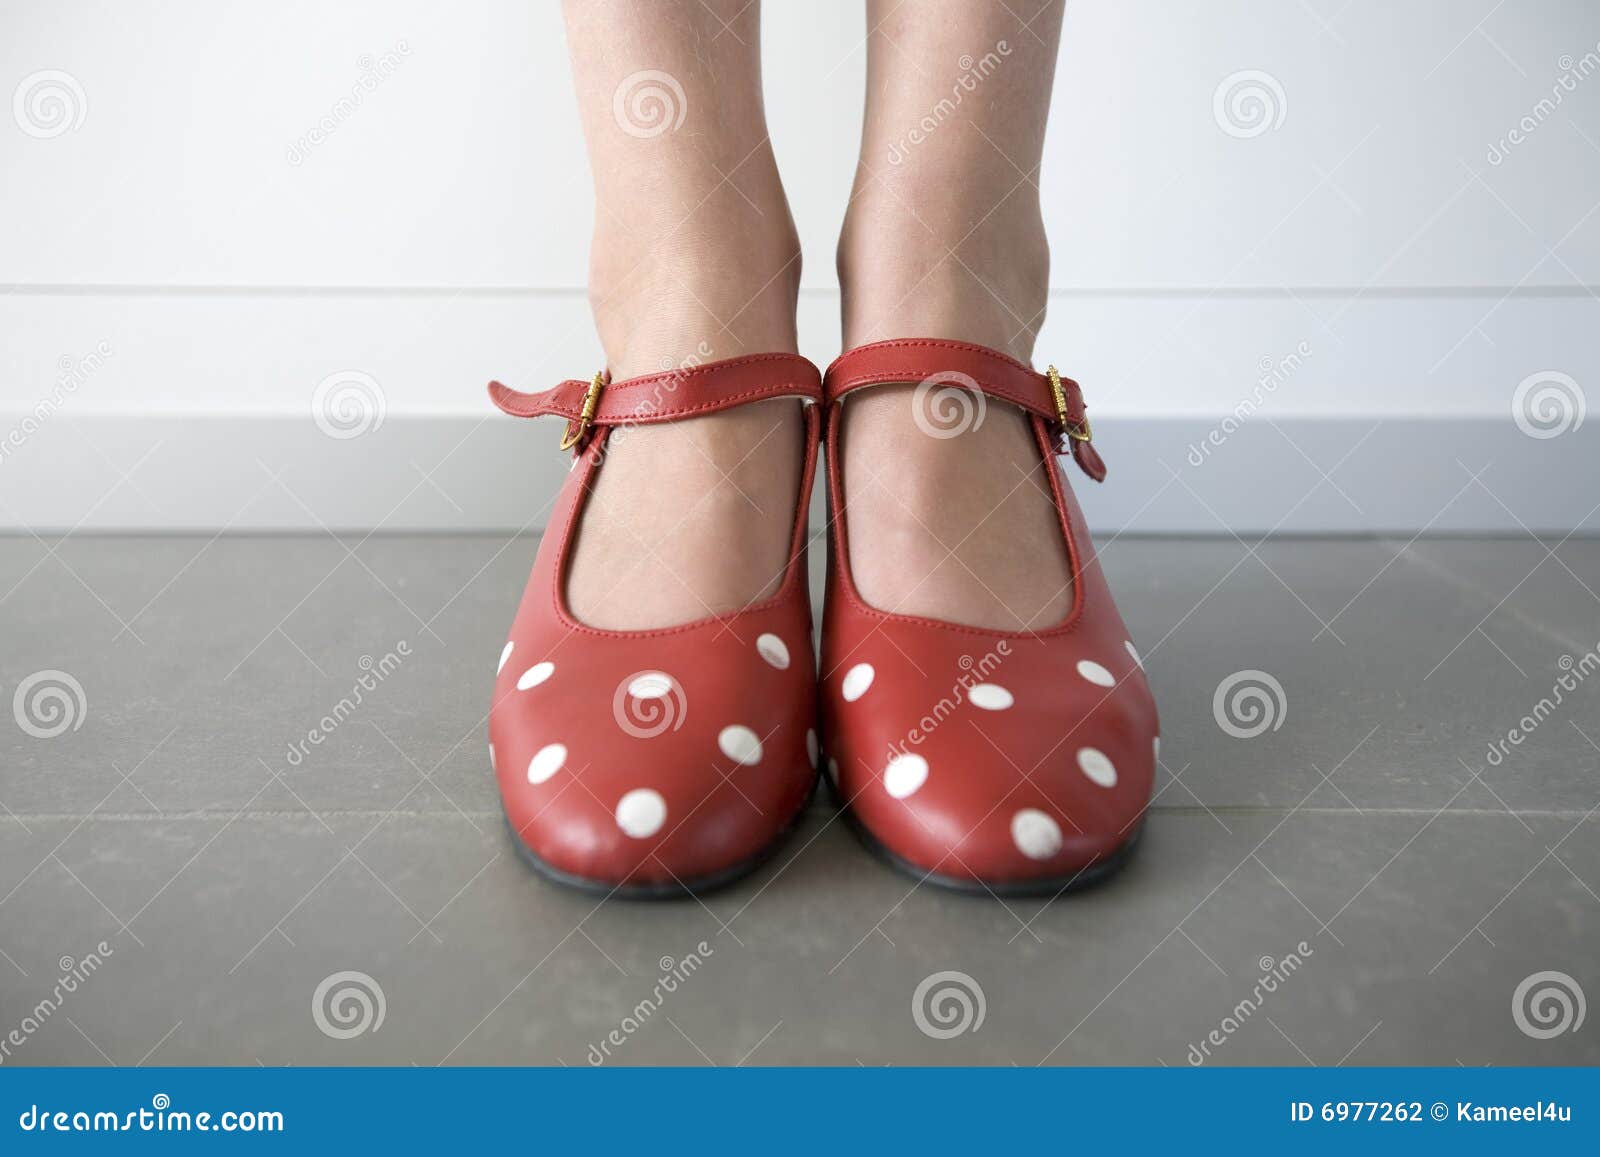 red flamenco shoes